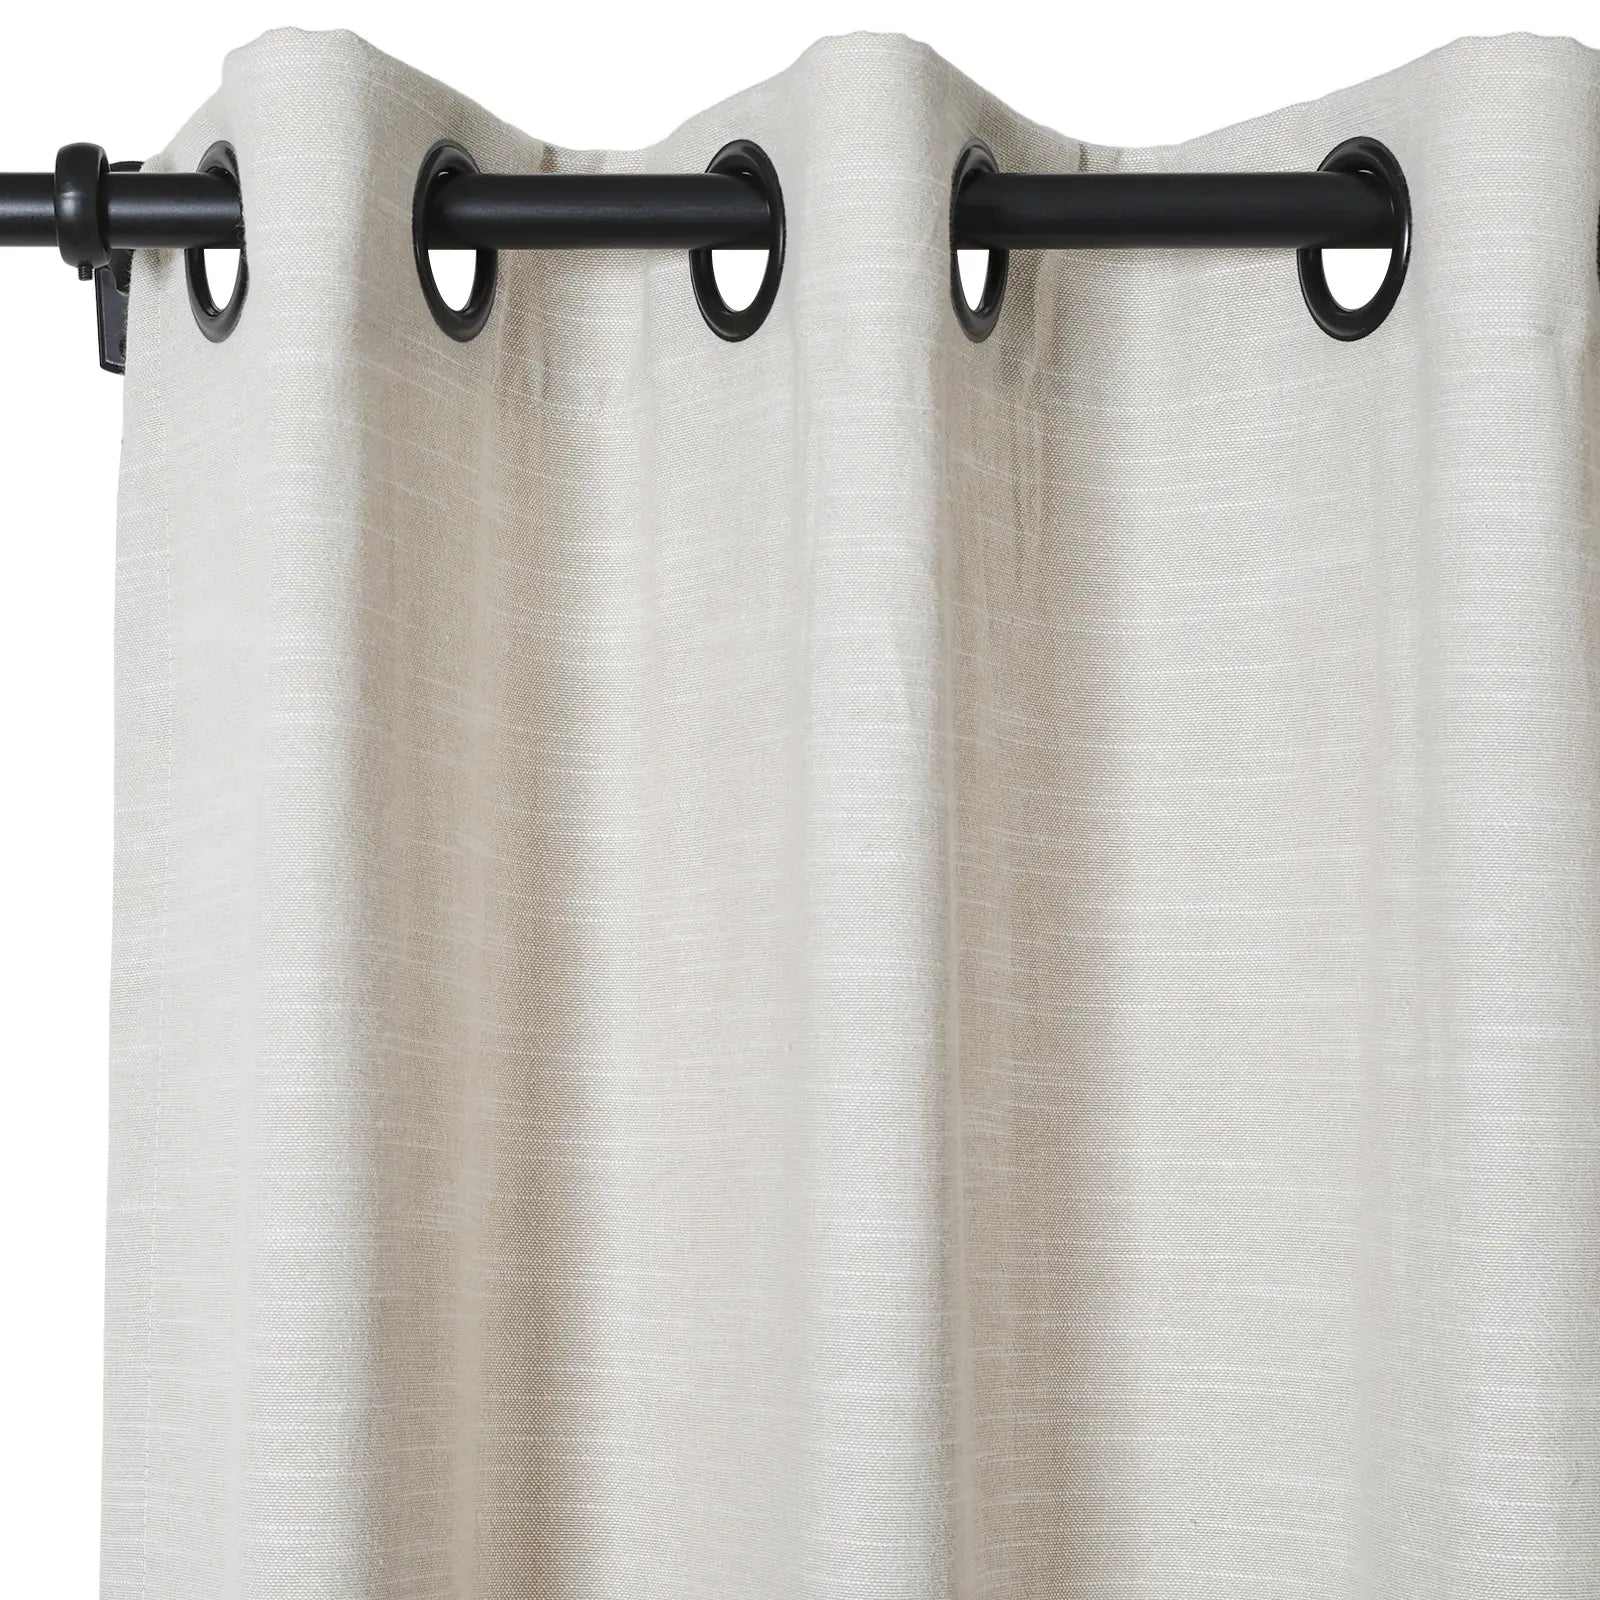 Aira Luxury Linen Cotton Grommet Blackout Curtain, Bedroom